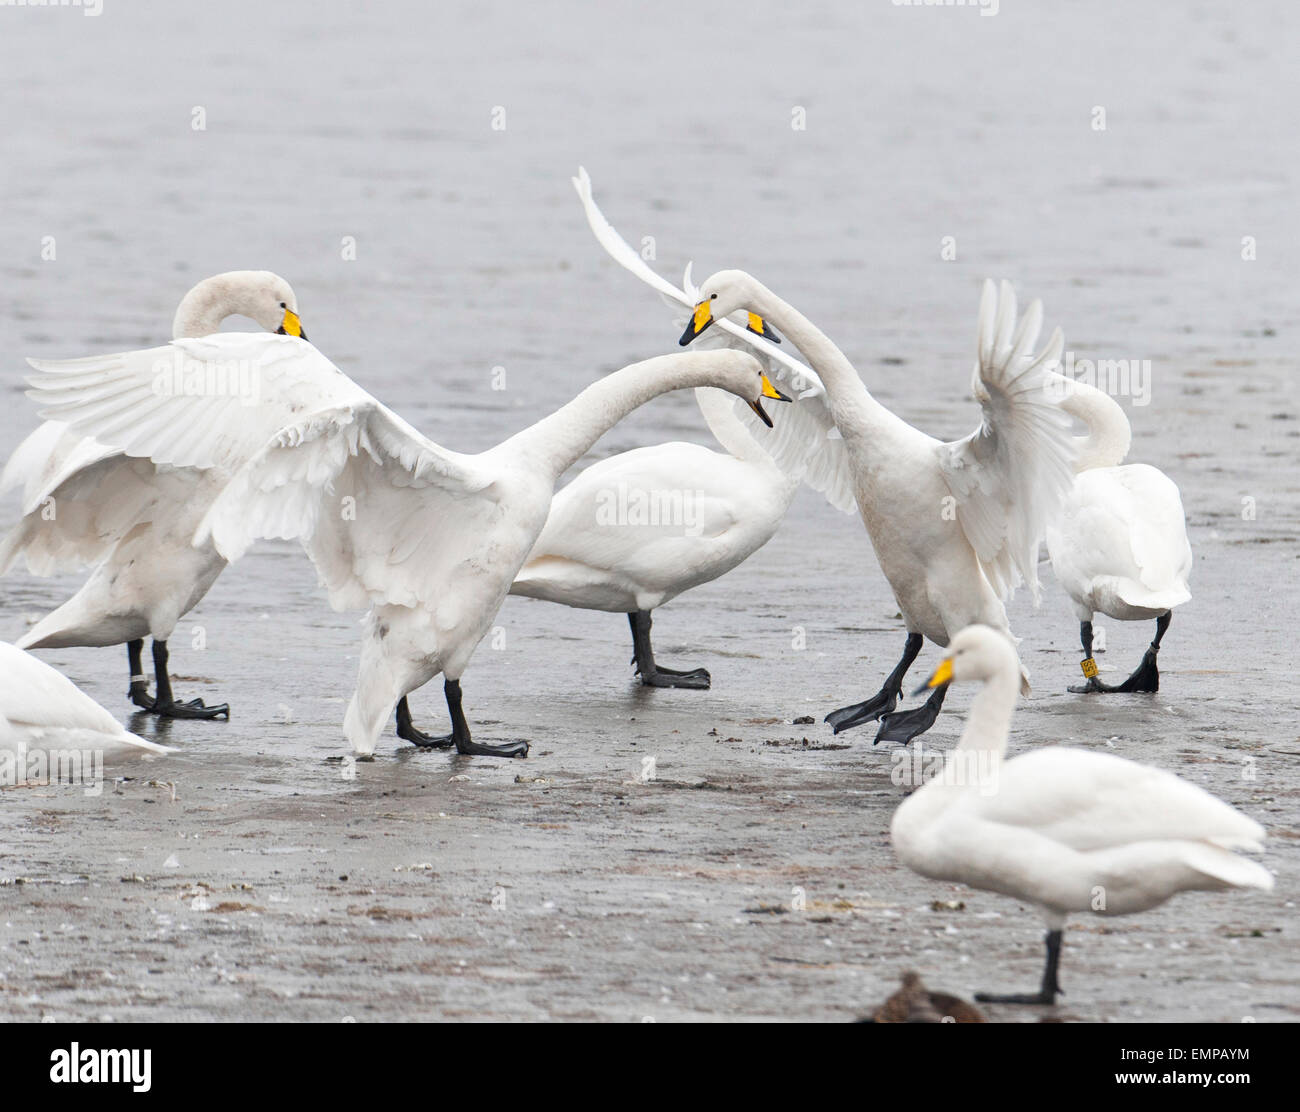 Aggressive behavior of whooper swans Cygnus cygnus during winter on ice. Stock Photo